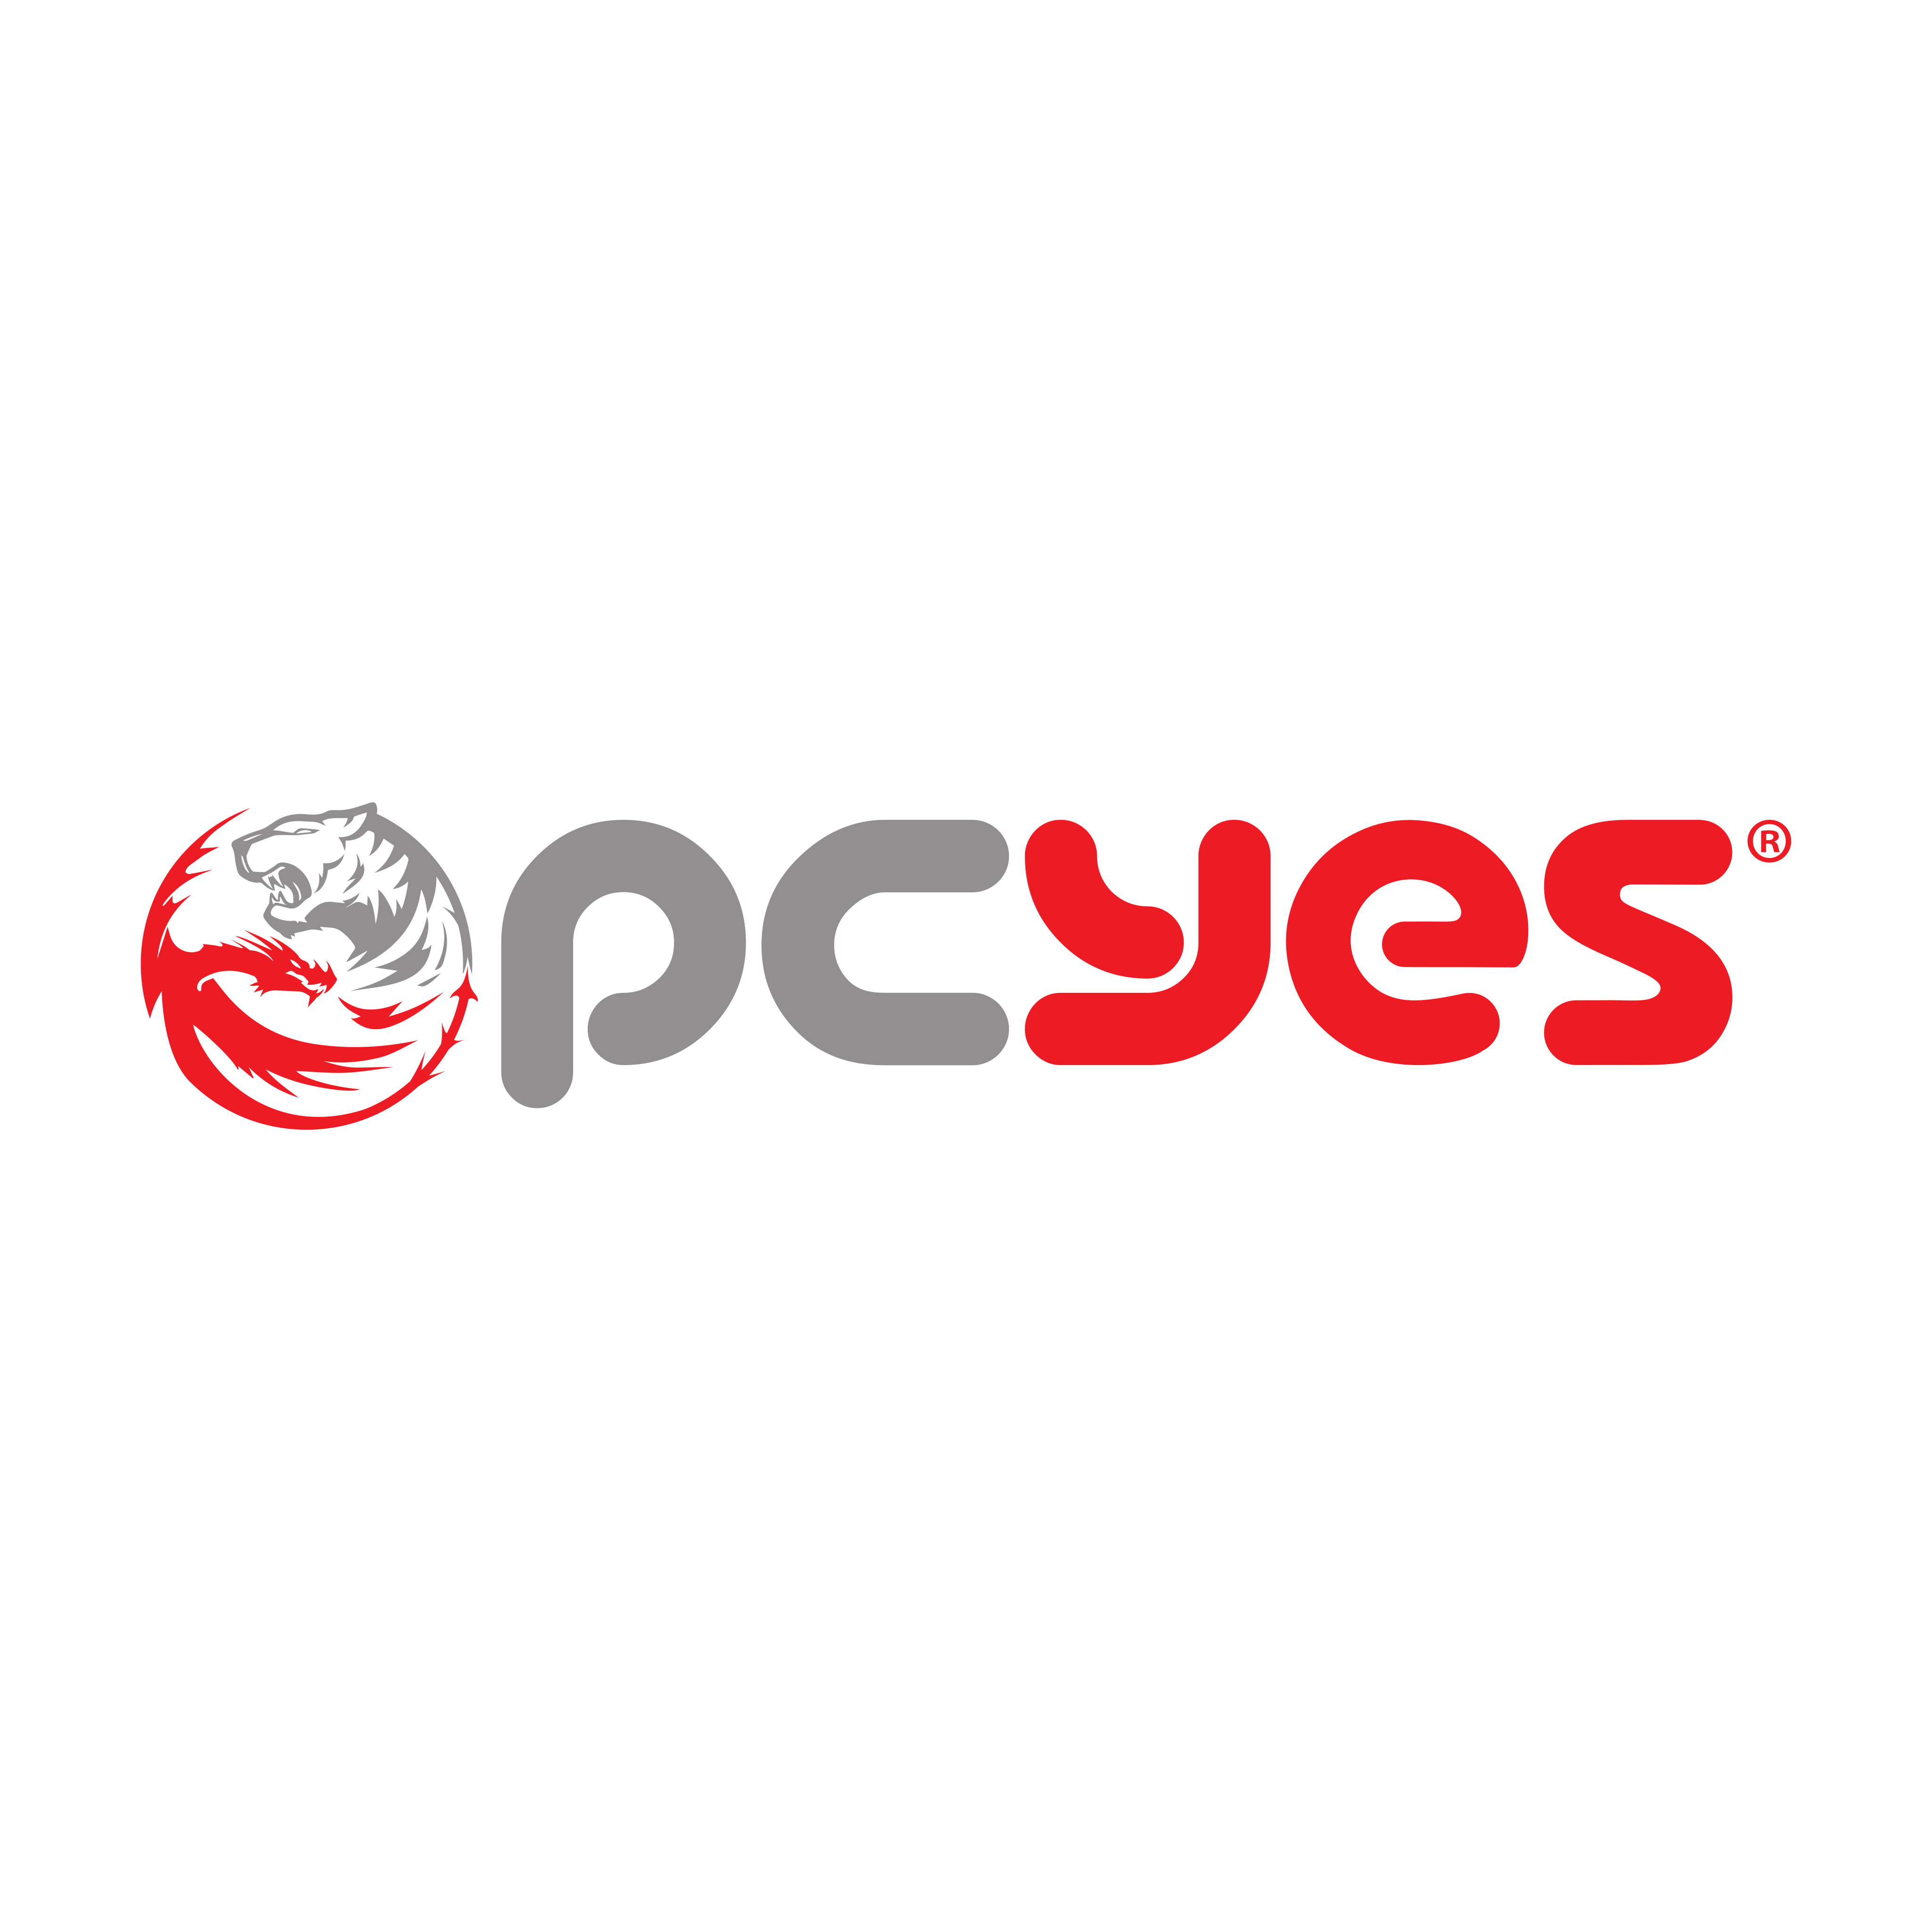 PCYES Logo PNG.